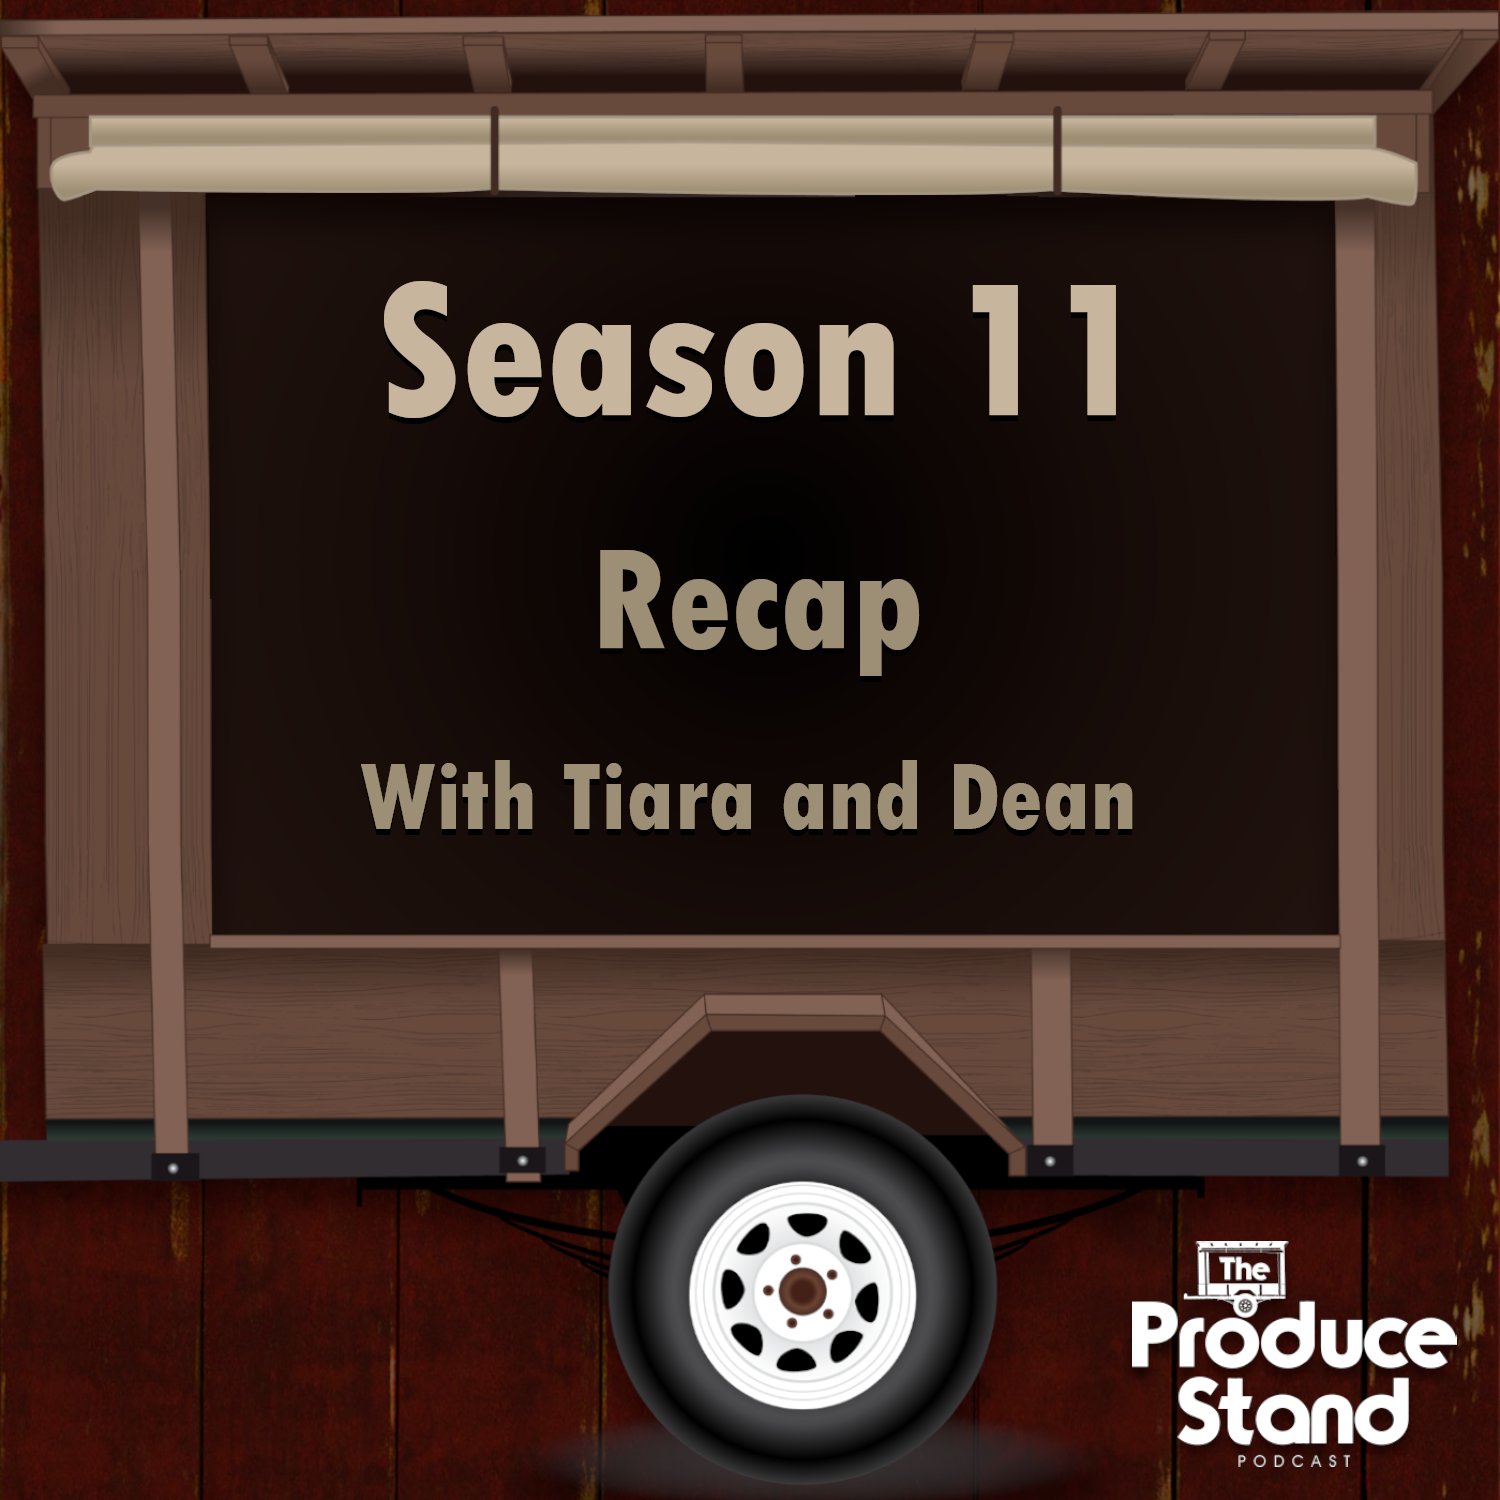 TPS163: Season 11 Recap